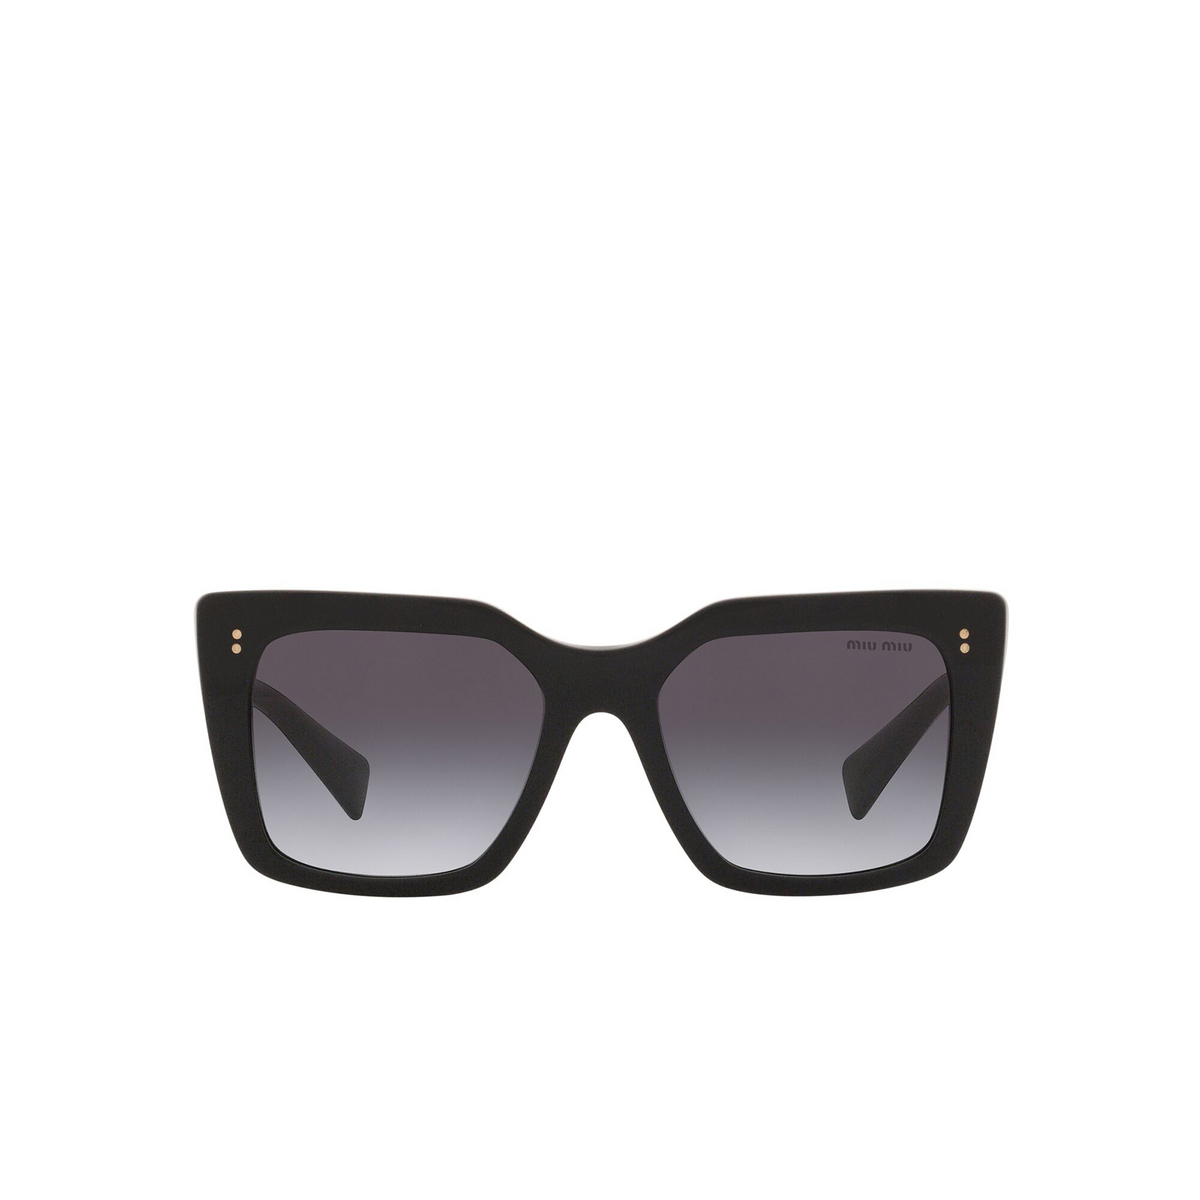 Miu Miu® Square Sunglasses: MU 02WS color Black 1AB5D1 - front view.